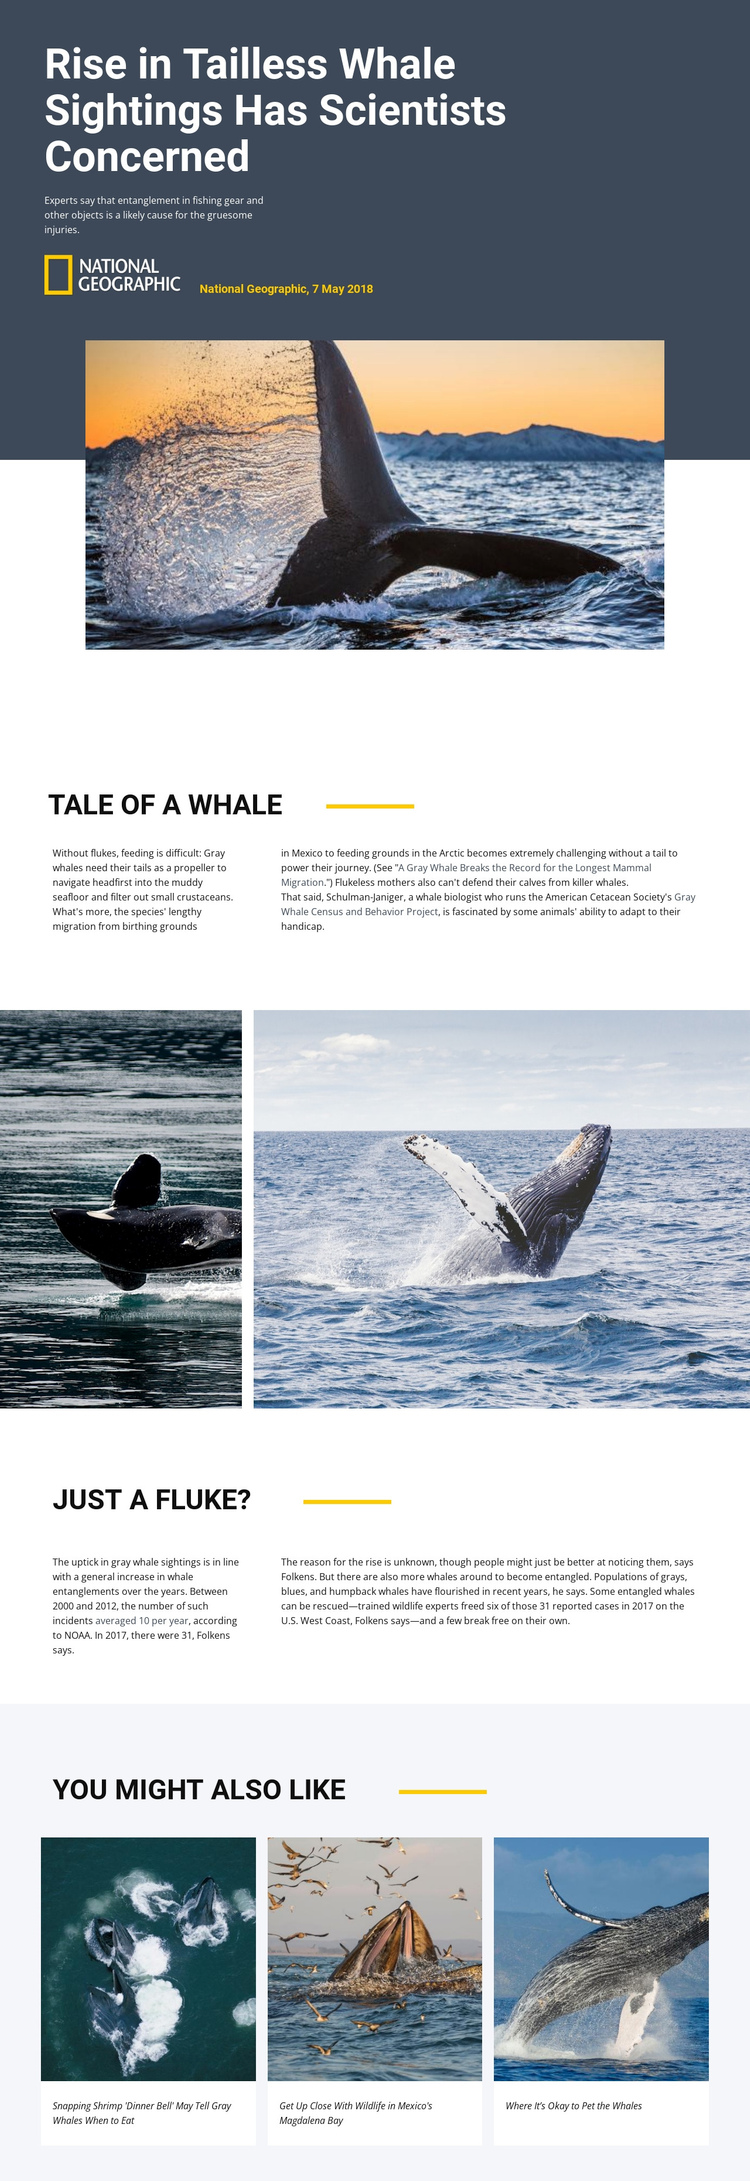 Whale watching center Website Builder Software